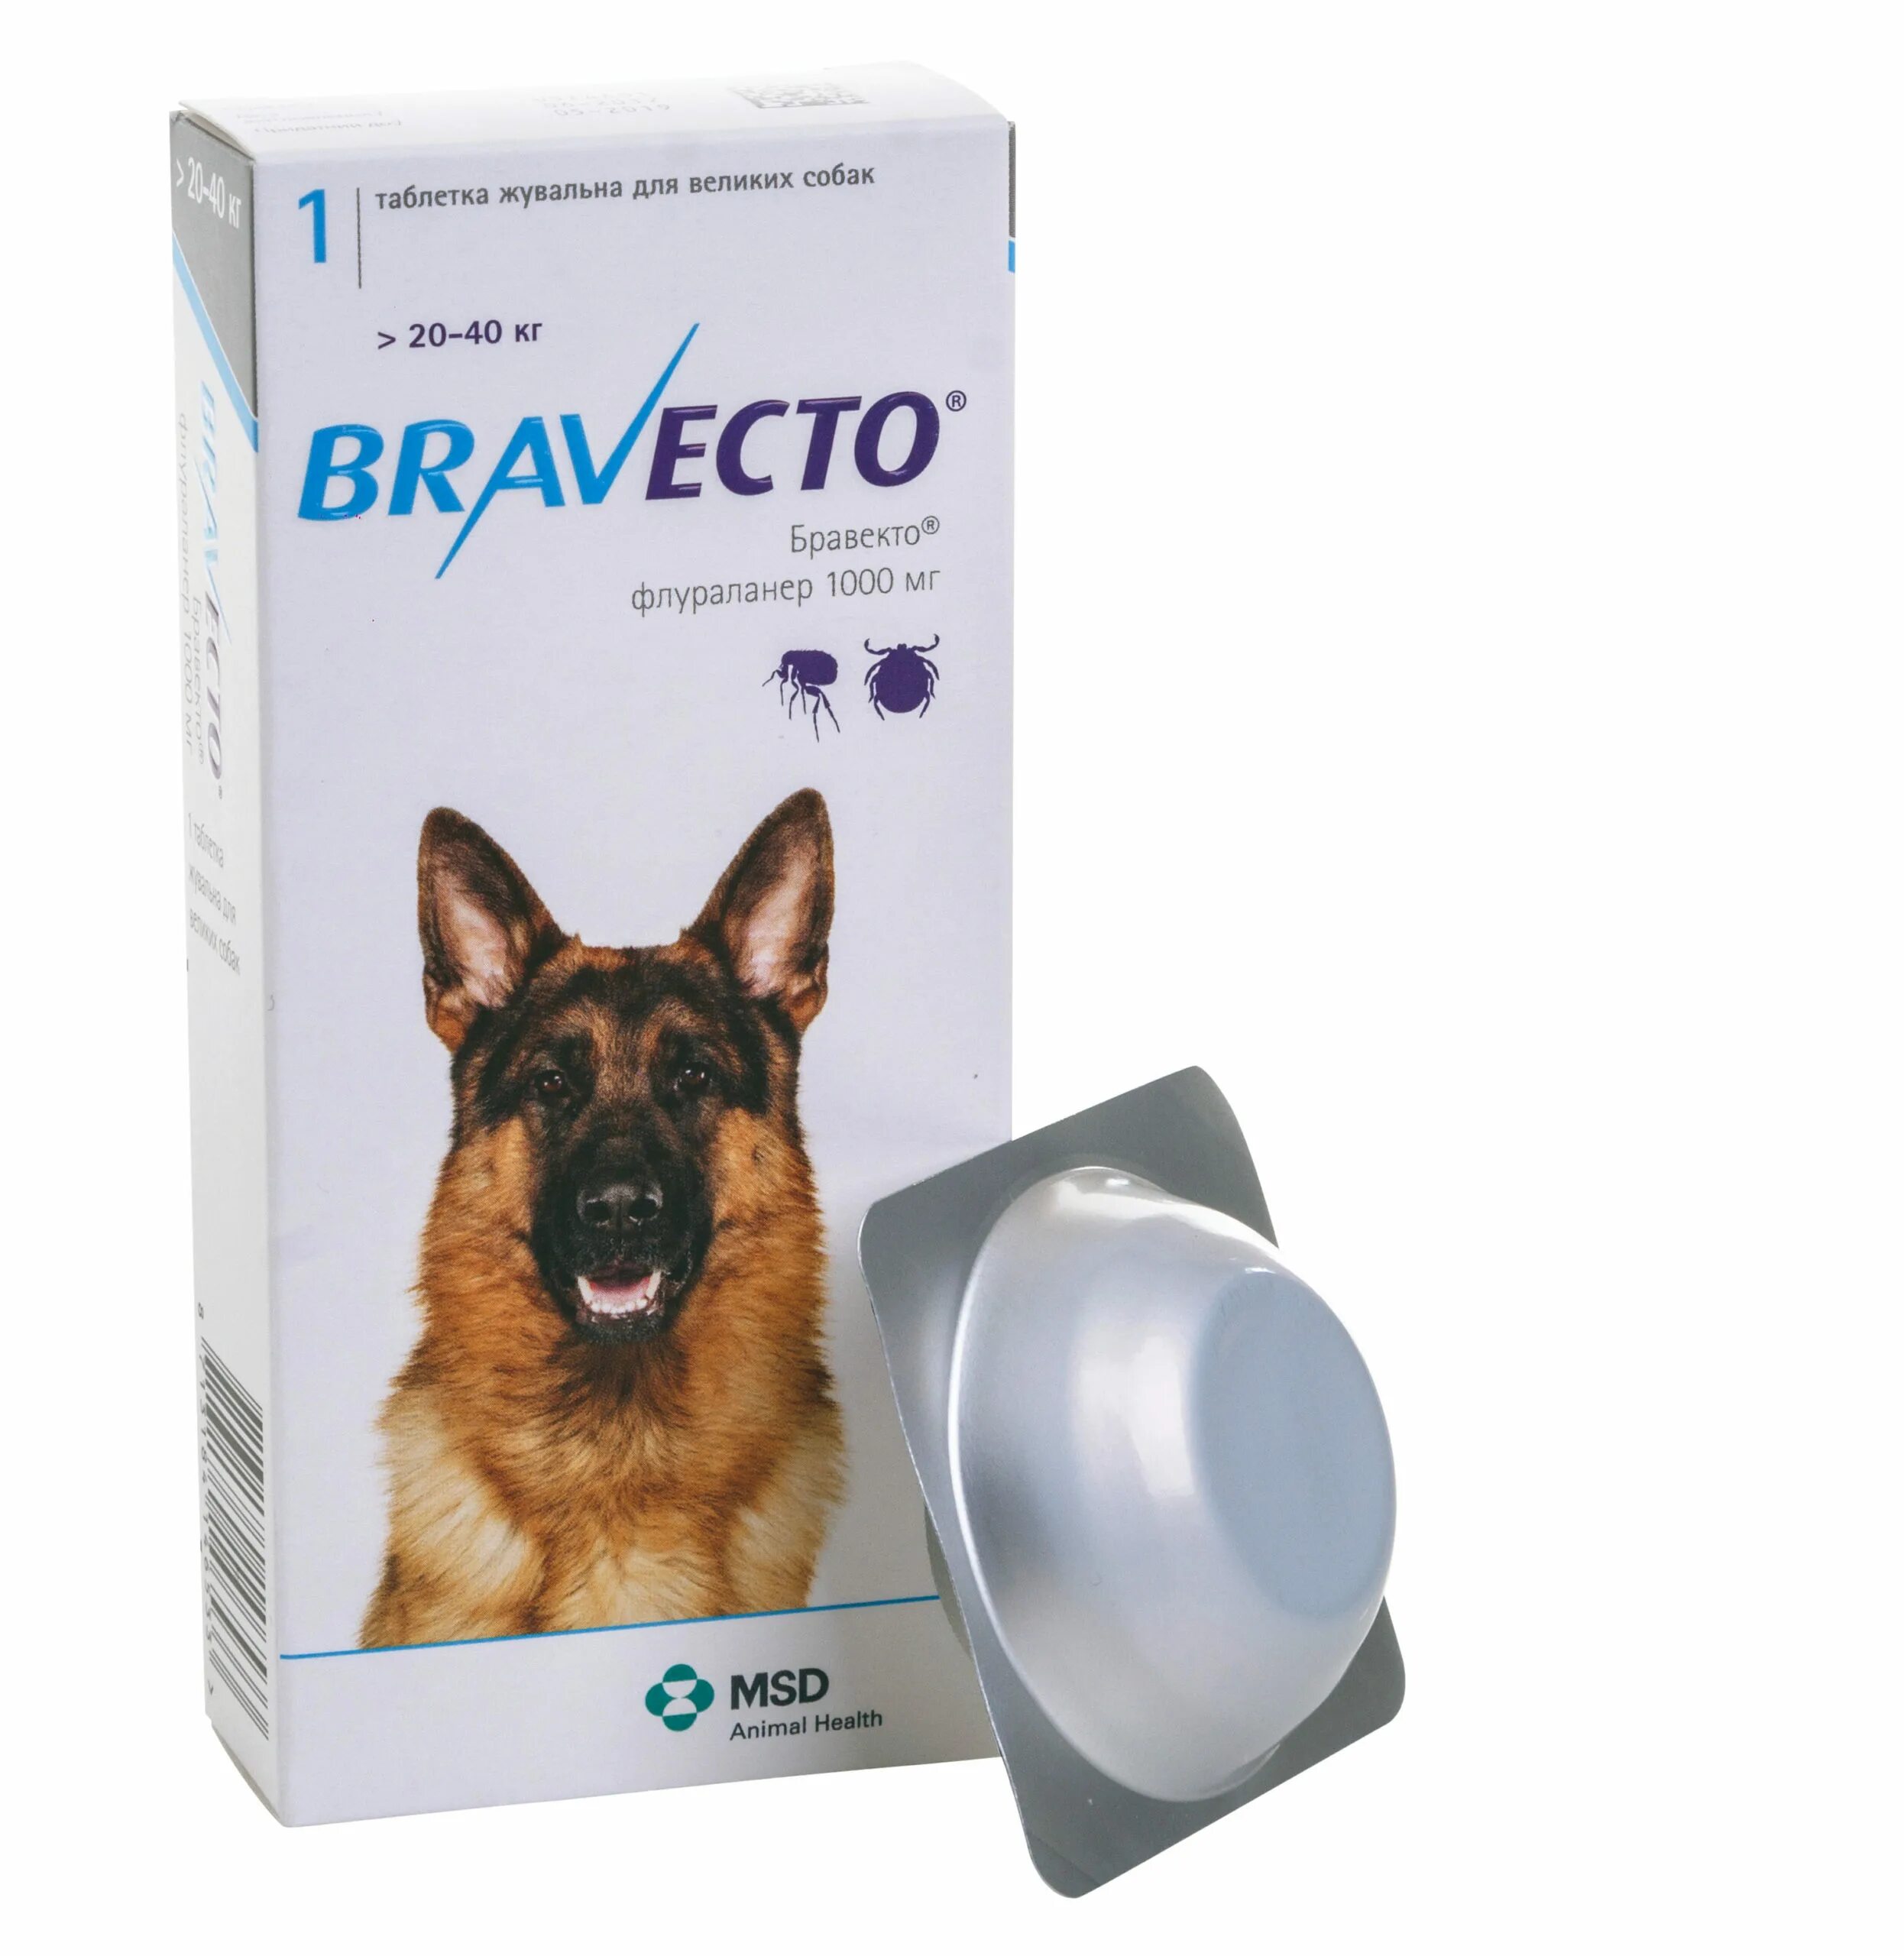 Бравекто для собак оригинал. Таблетки от блох и клещей для собак Бравекто. Бравекто для собак 20-40 кг таблетки. Бравекто (Bravecto) 20-40 кг, таблетка 1000 мг. Бравекто 112.5 мг Флураланер.